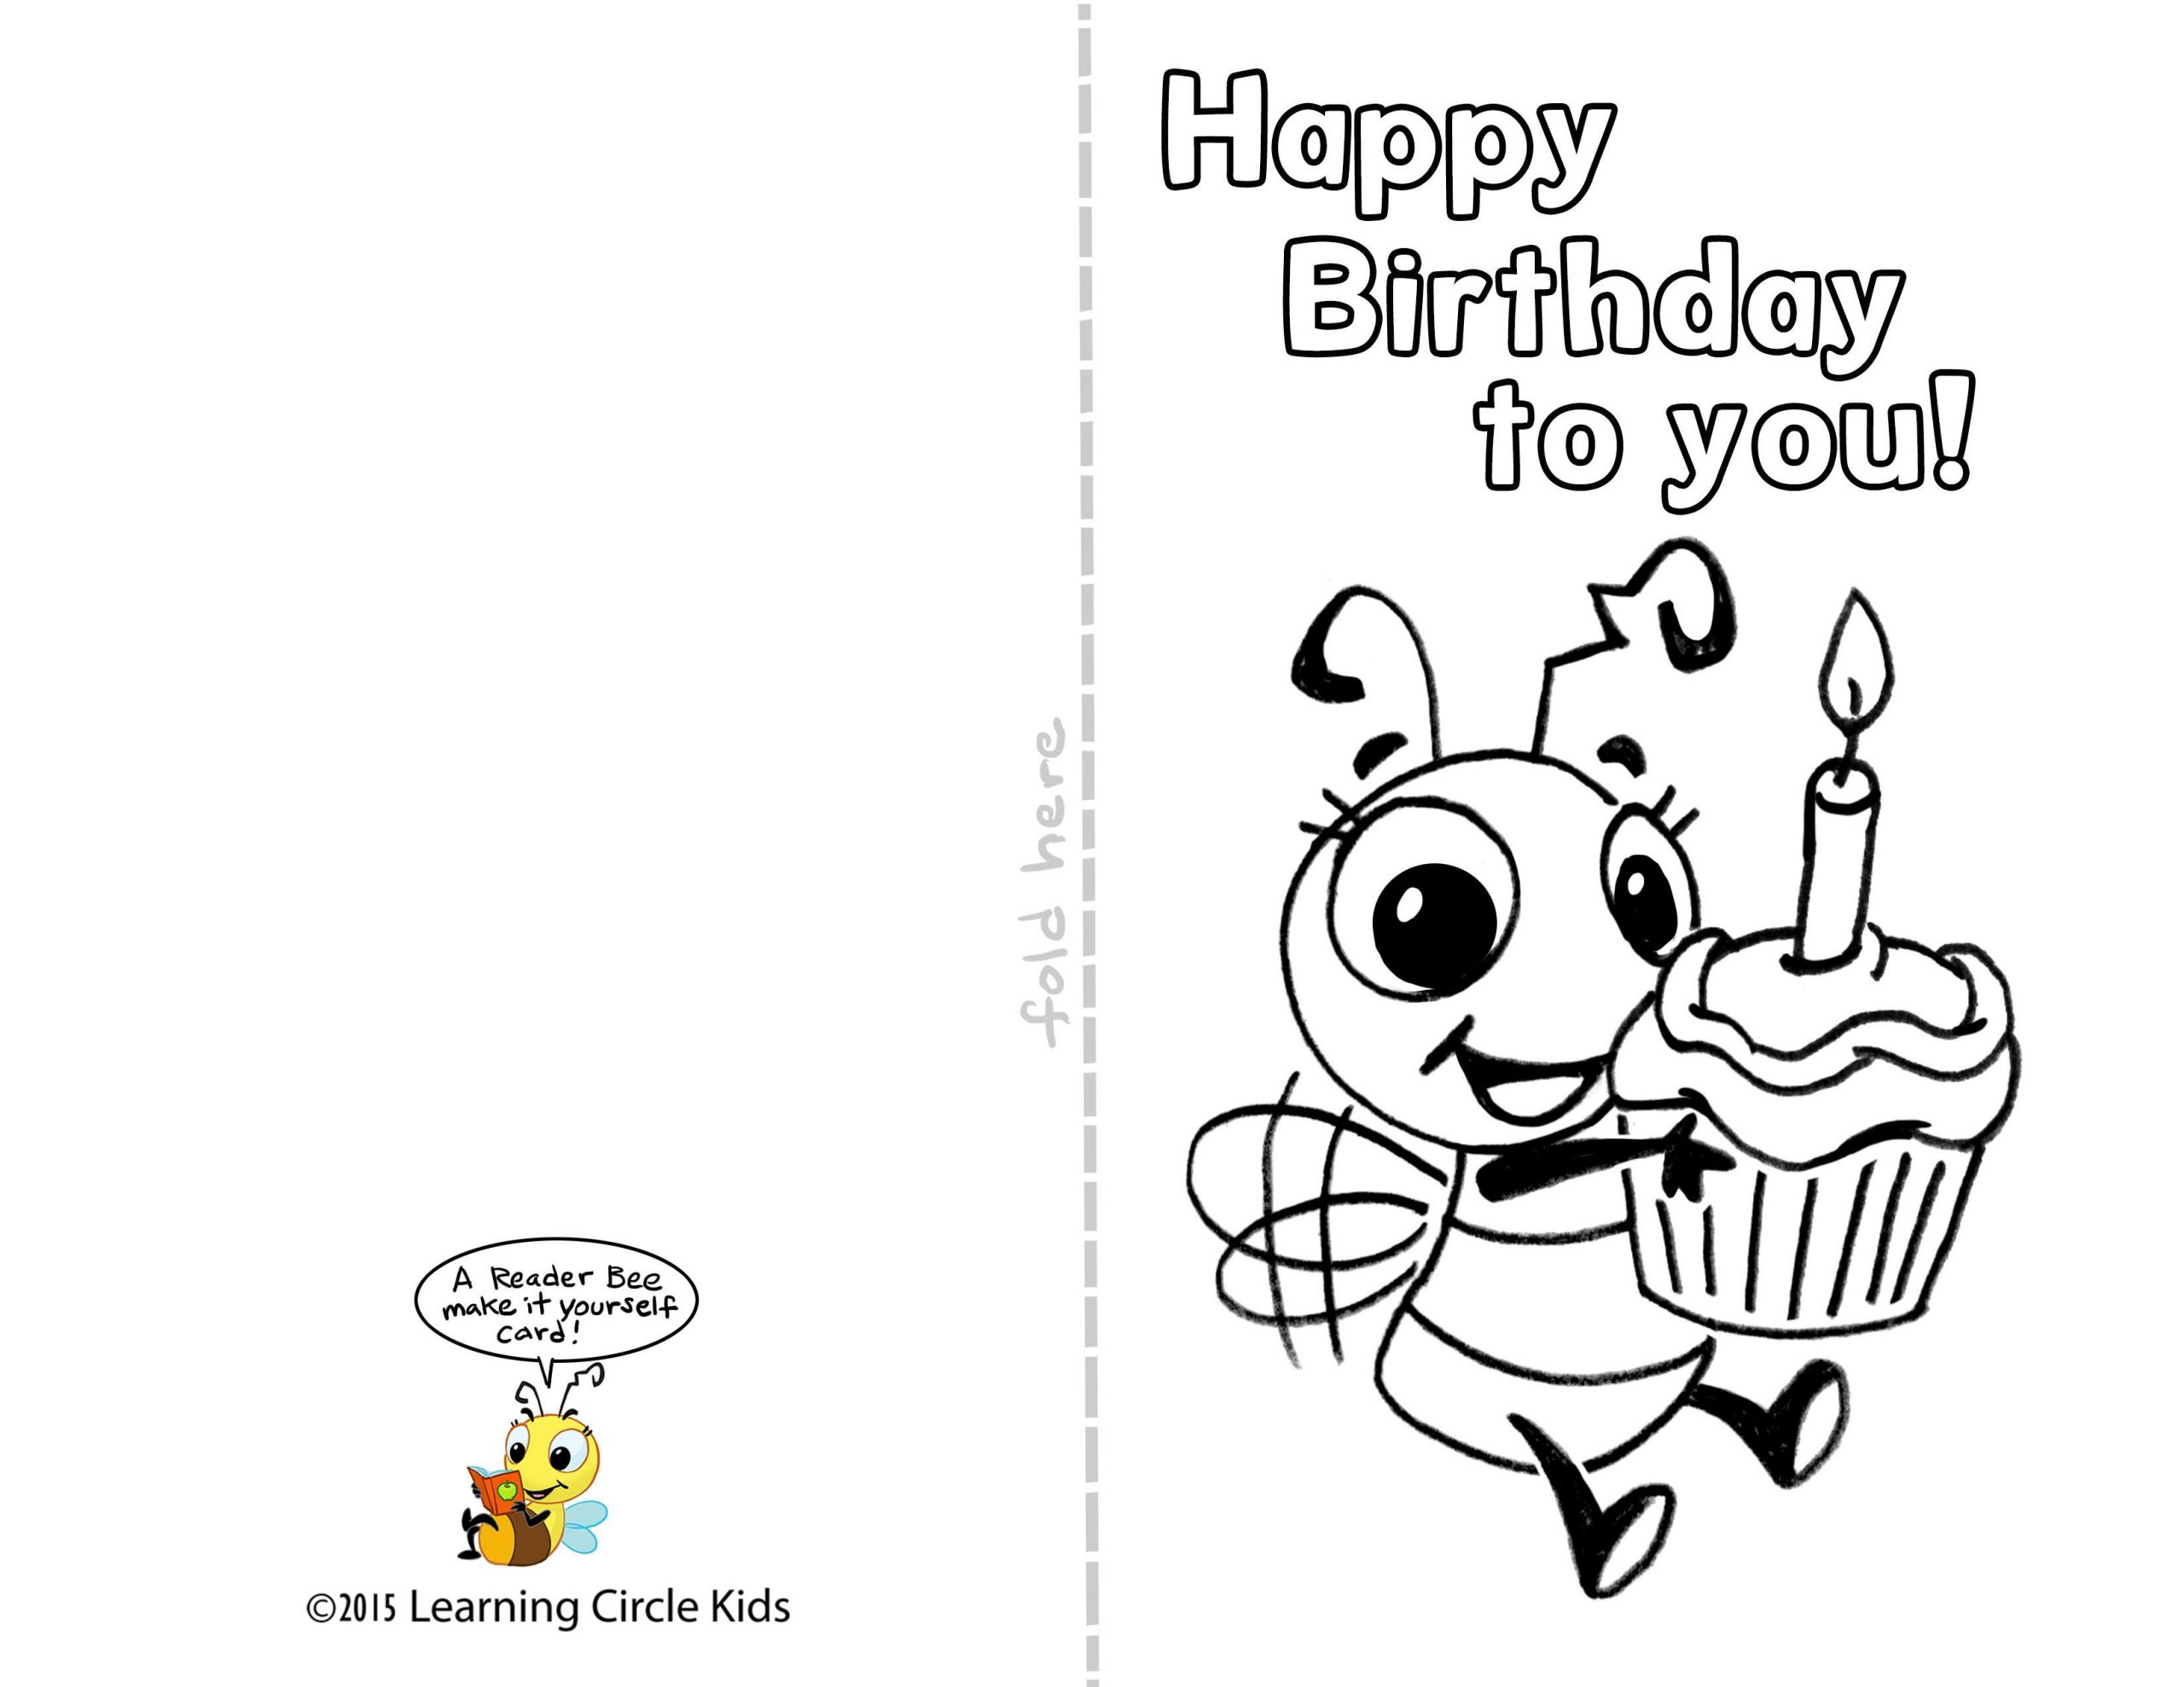 Free Printable Birthday Cards For Kids
 DIY Free printable birthday card for kids to decorate and